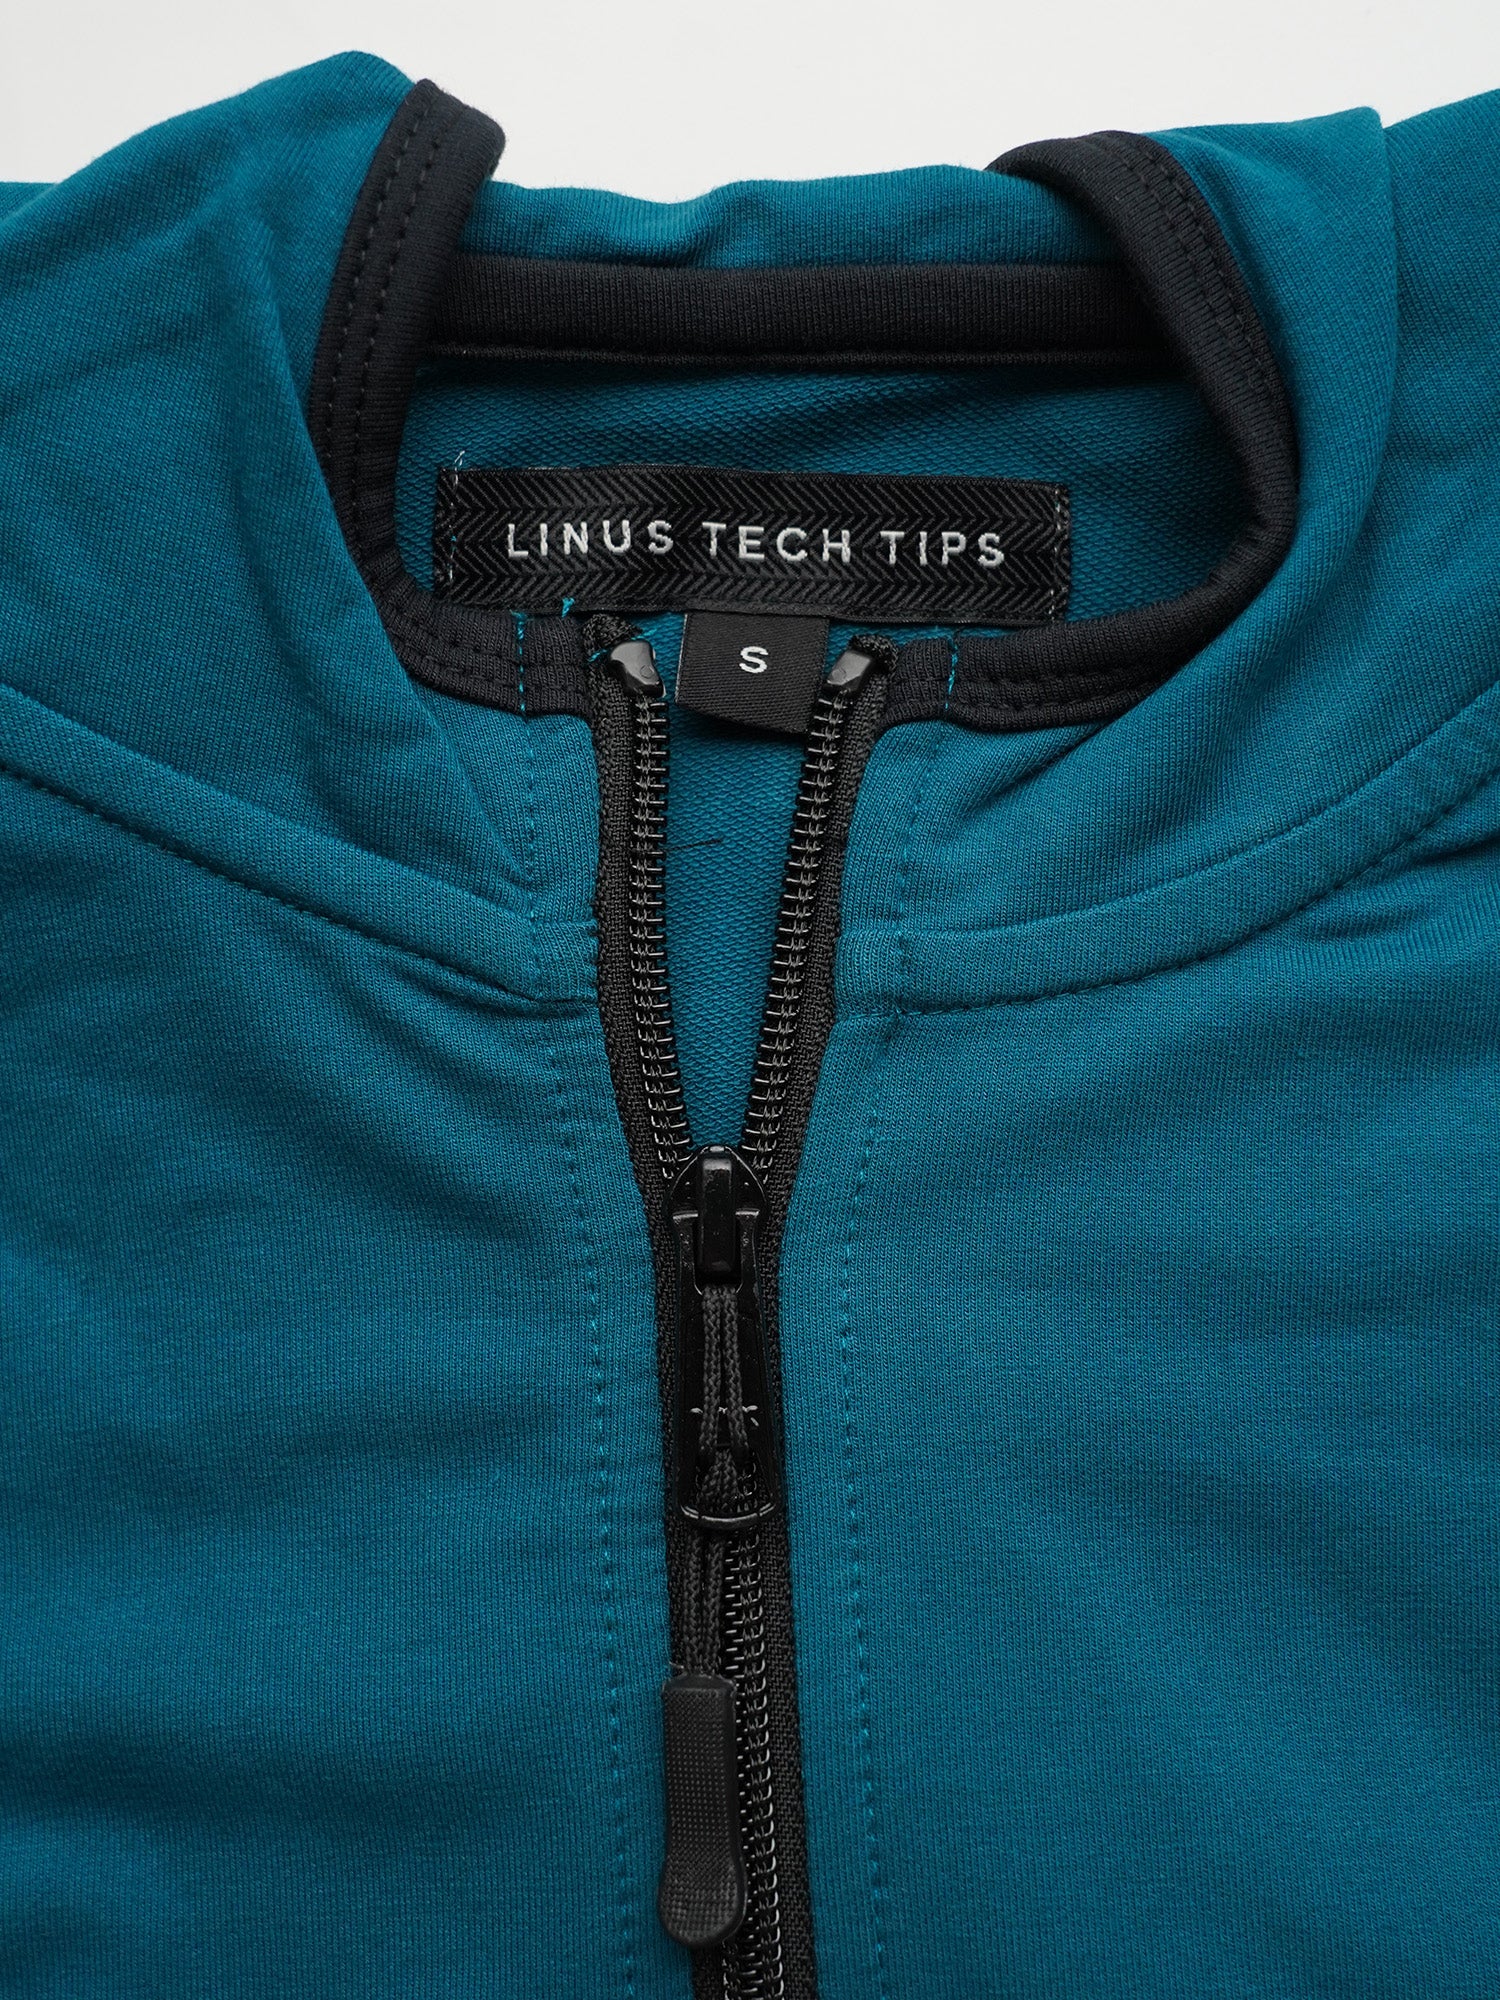 Linus Tech Tips Store Track Jacket Medium | Linus Tech Tips